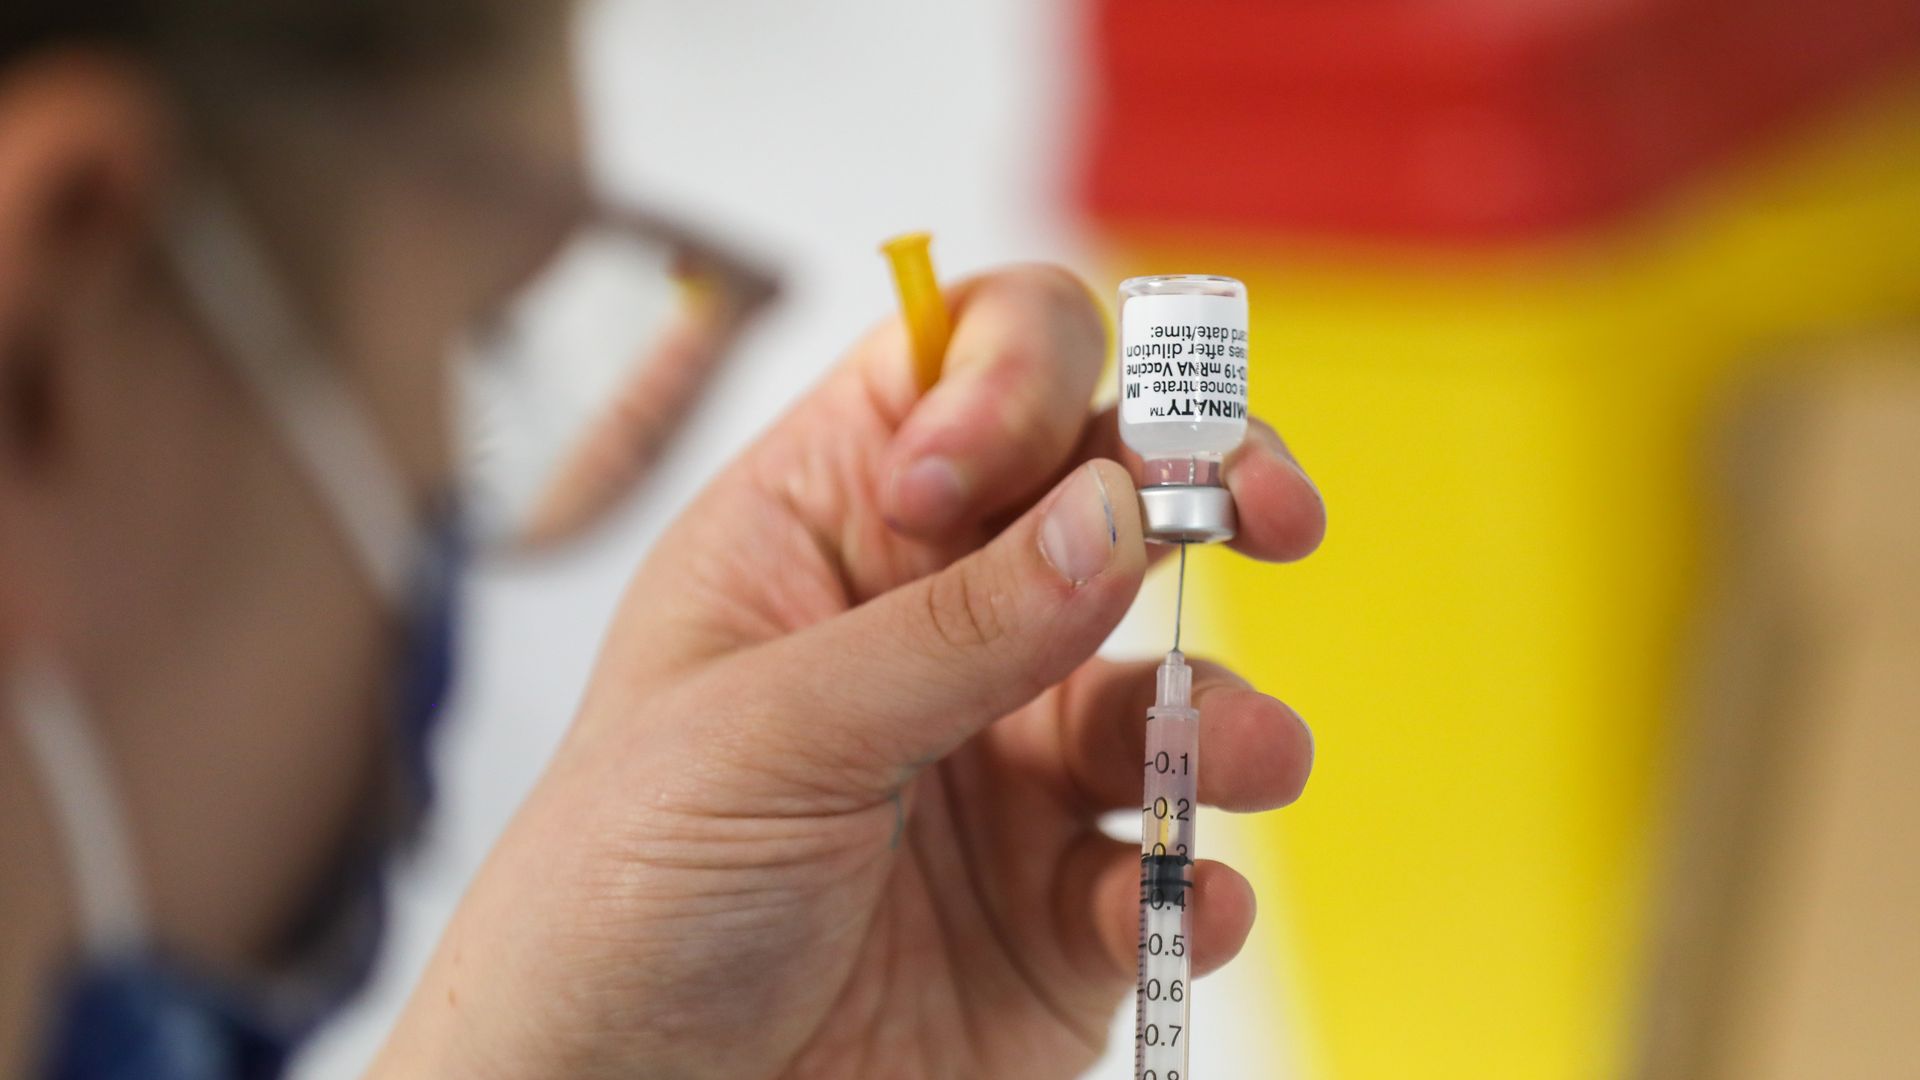 A health worker prepares a dose of the vaccine against Covid-19 coronavirus.